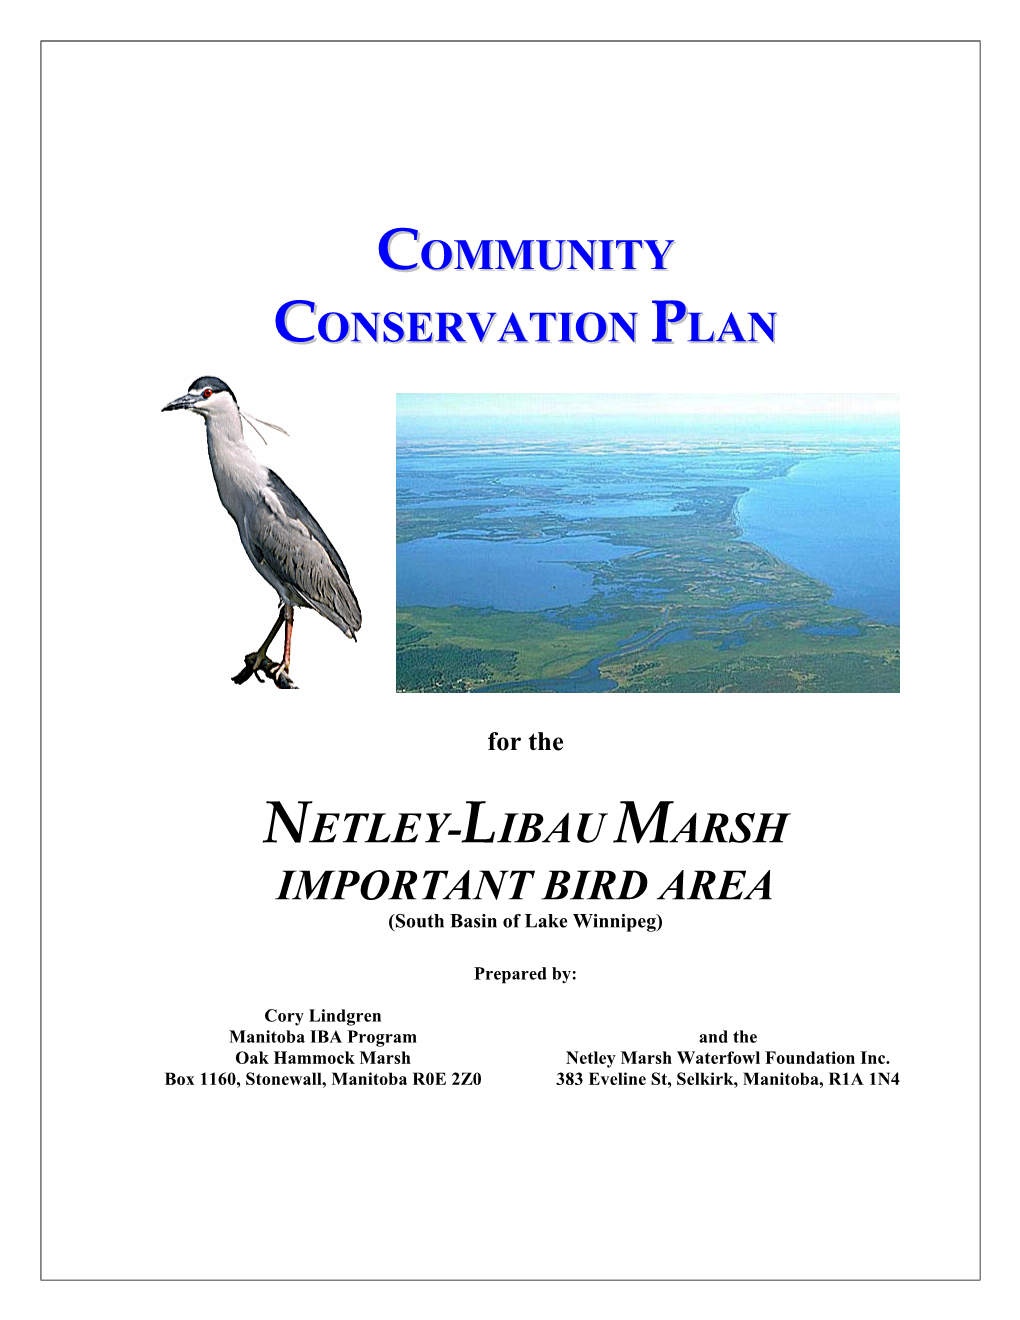 NETLEY-LIBAU MARSH IMPORTANT BIRD AREA (South Basin of Lake Winnipeg)